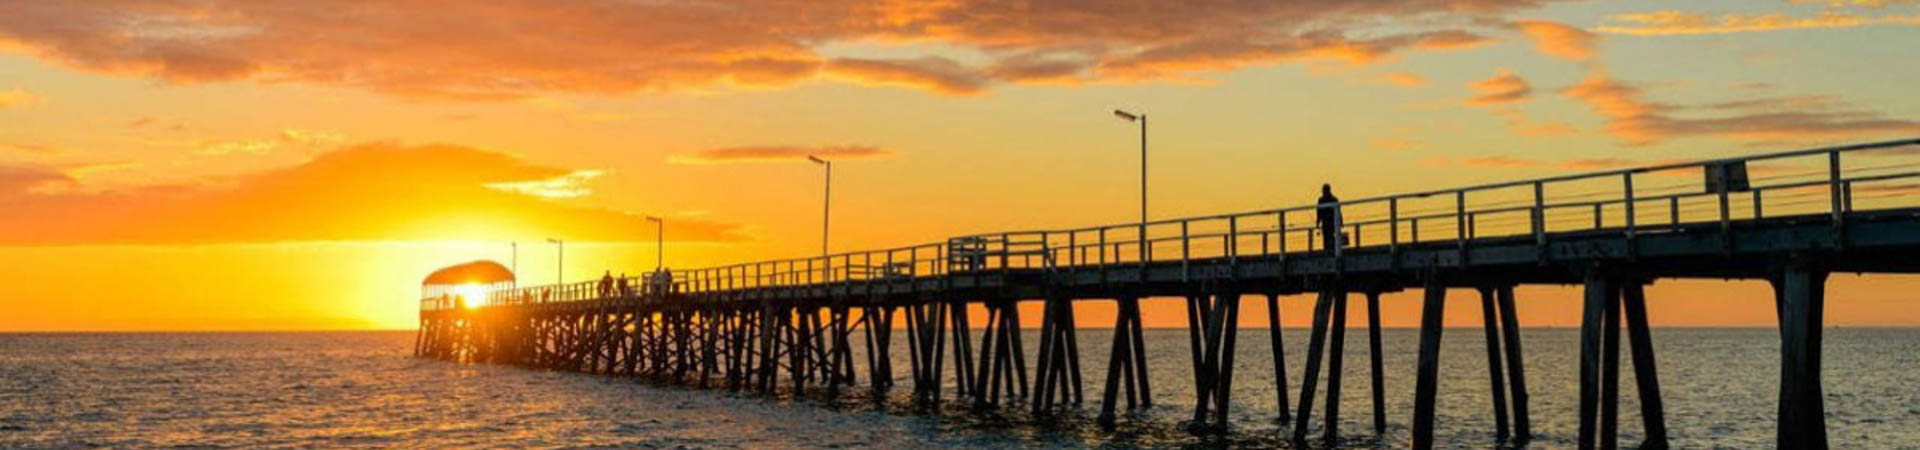 Henley Beach - Adelaide, Australia